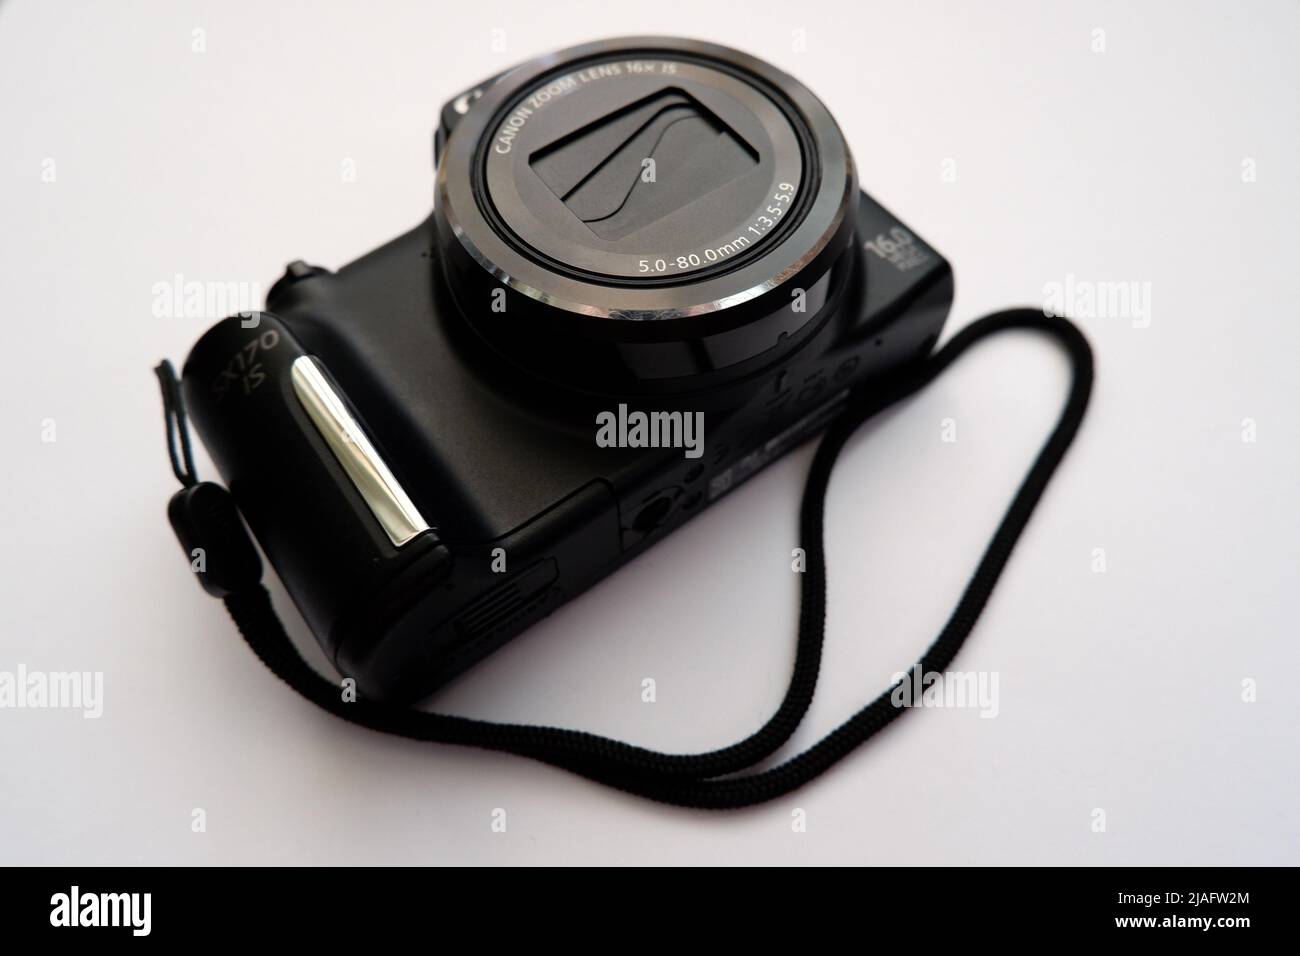 Ryazan, Russia - August 30, 2021: Canon compact digital camera.  Canon PowerShot SX170IS Digital Camera Stock Photo